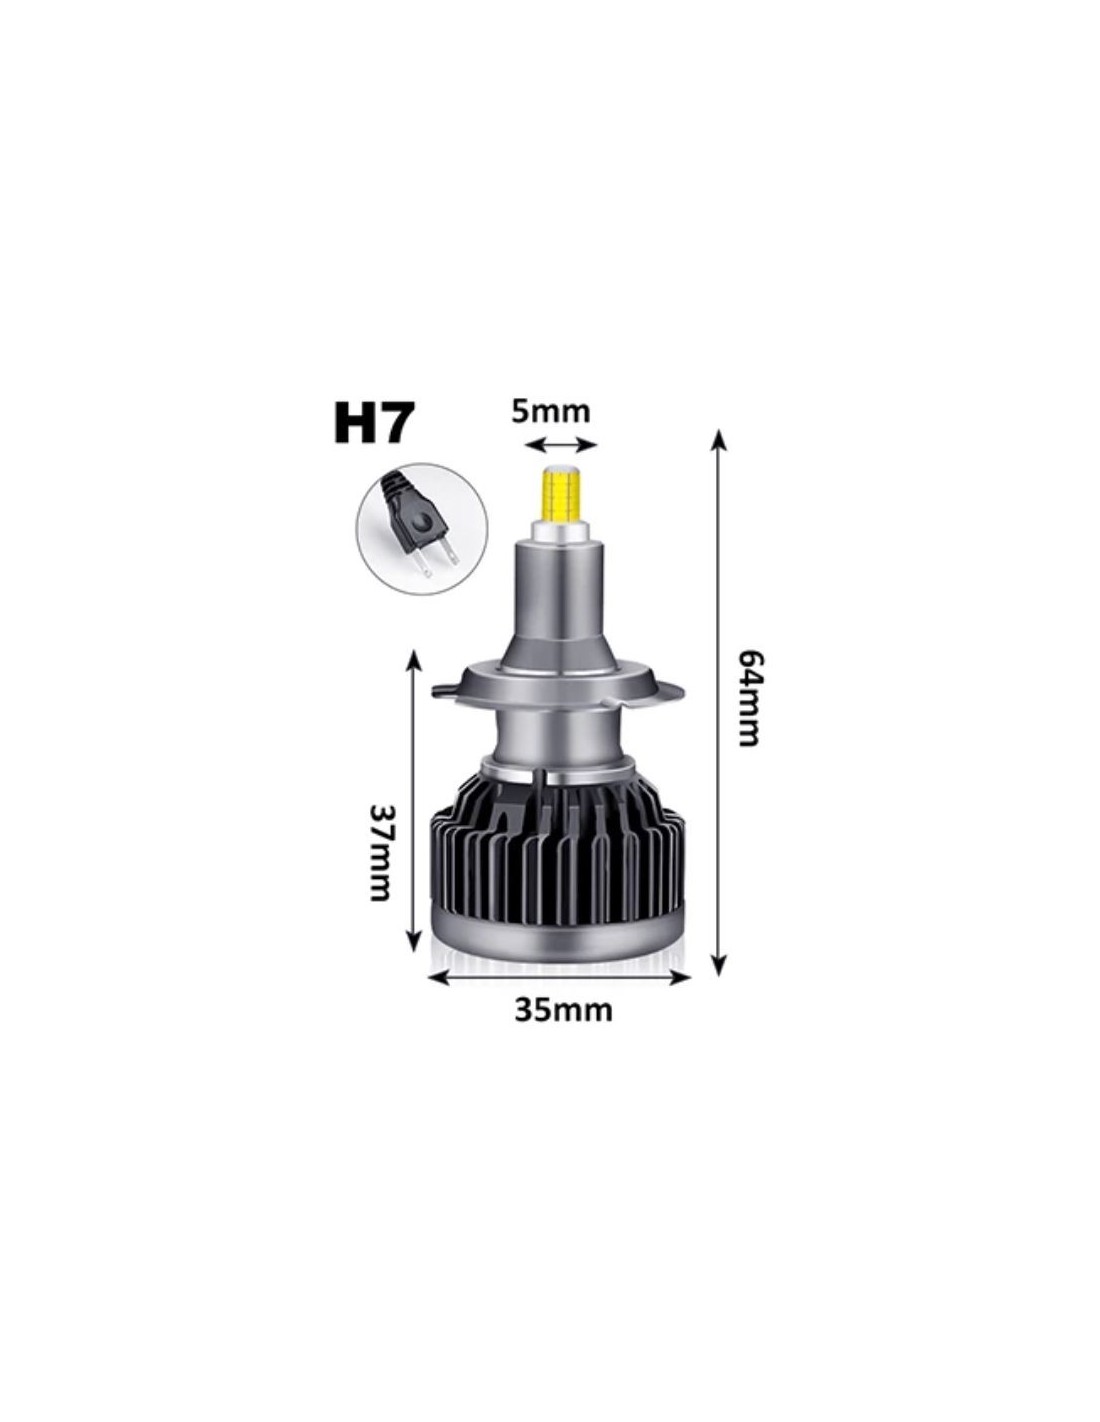 Lampade Led H7 360 TORNADO 3D Uniforme Senza Ombre Specifico